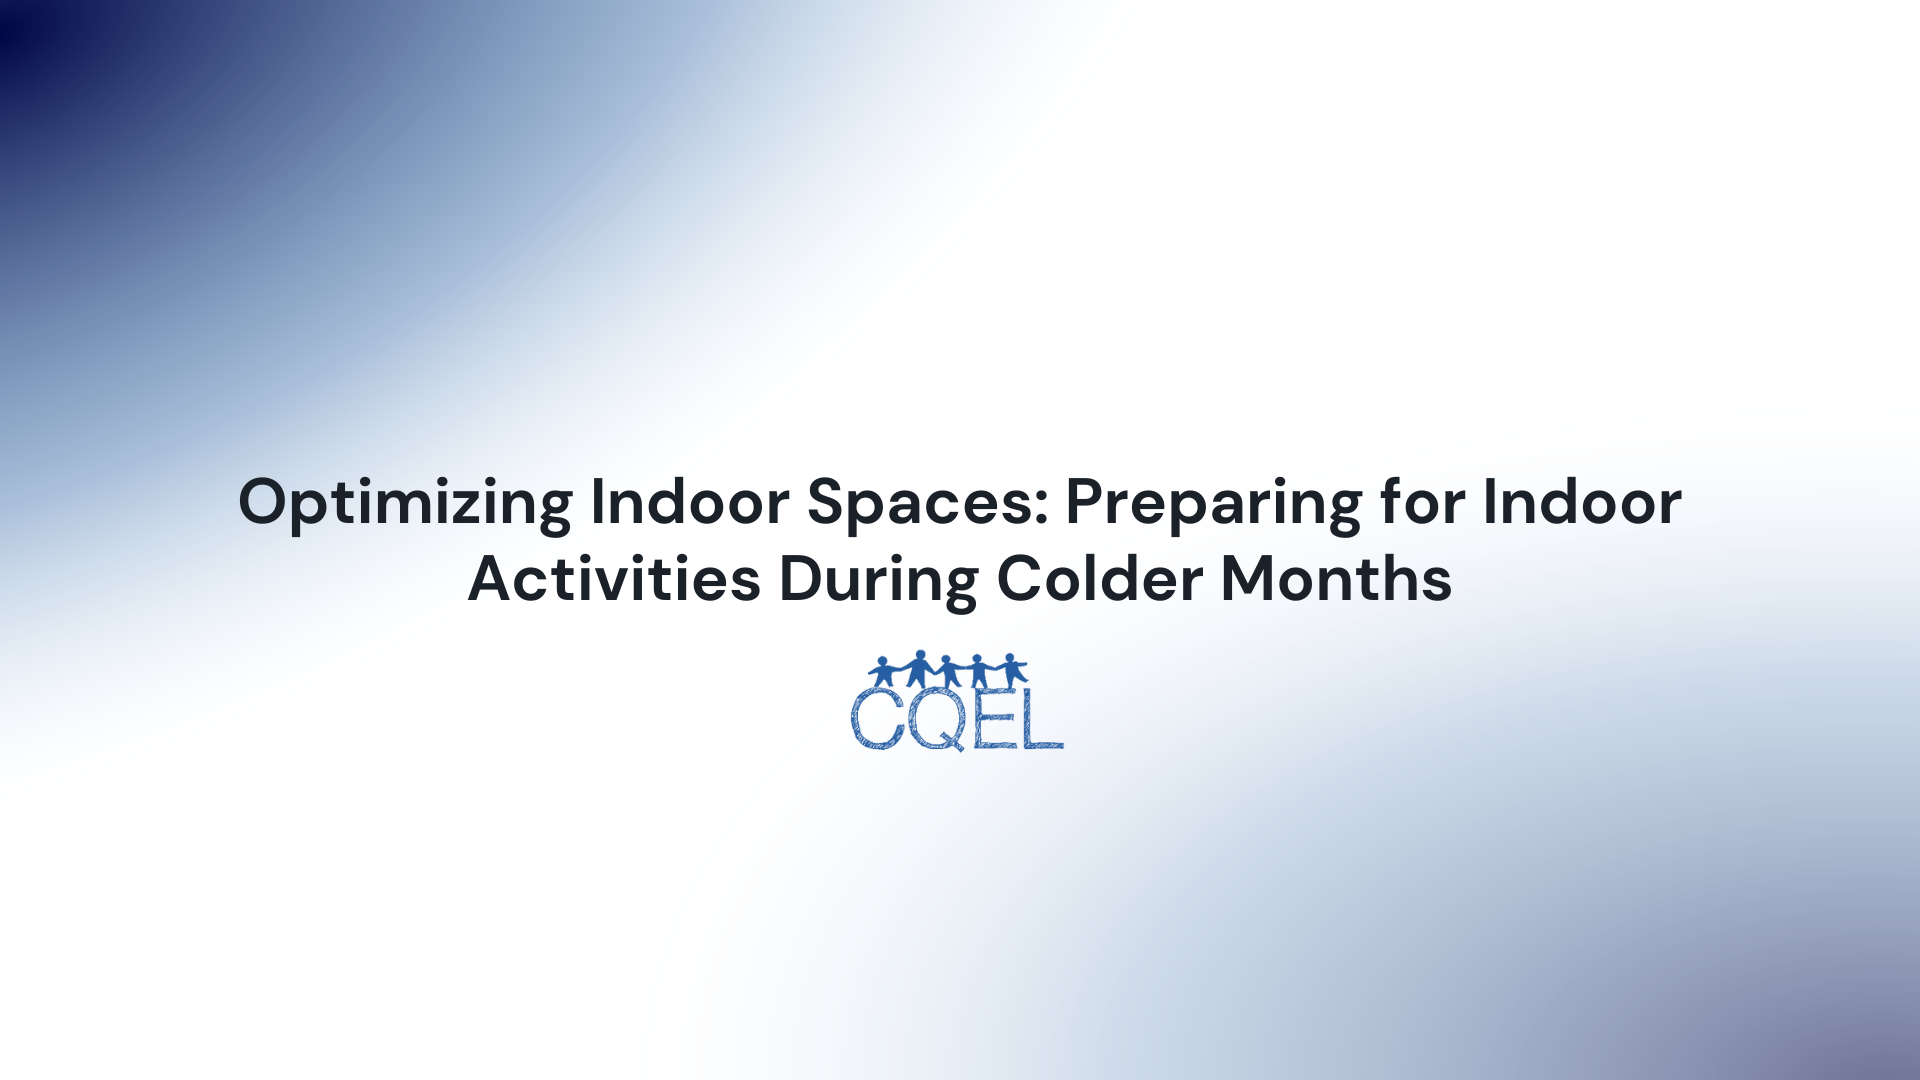 Optimizing Indoor Spaces: Preparing for Indoor Activities During Colder Months